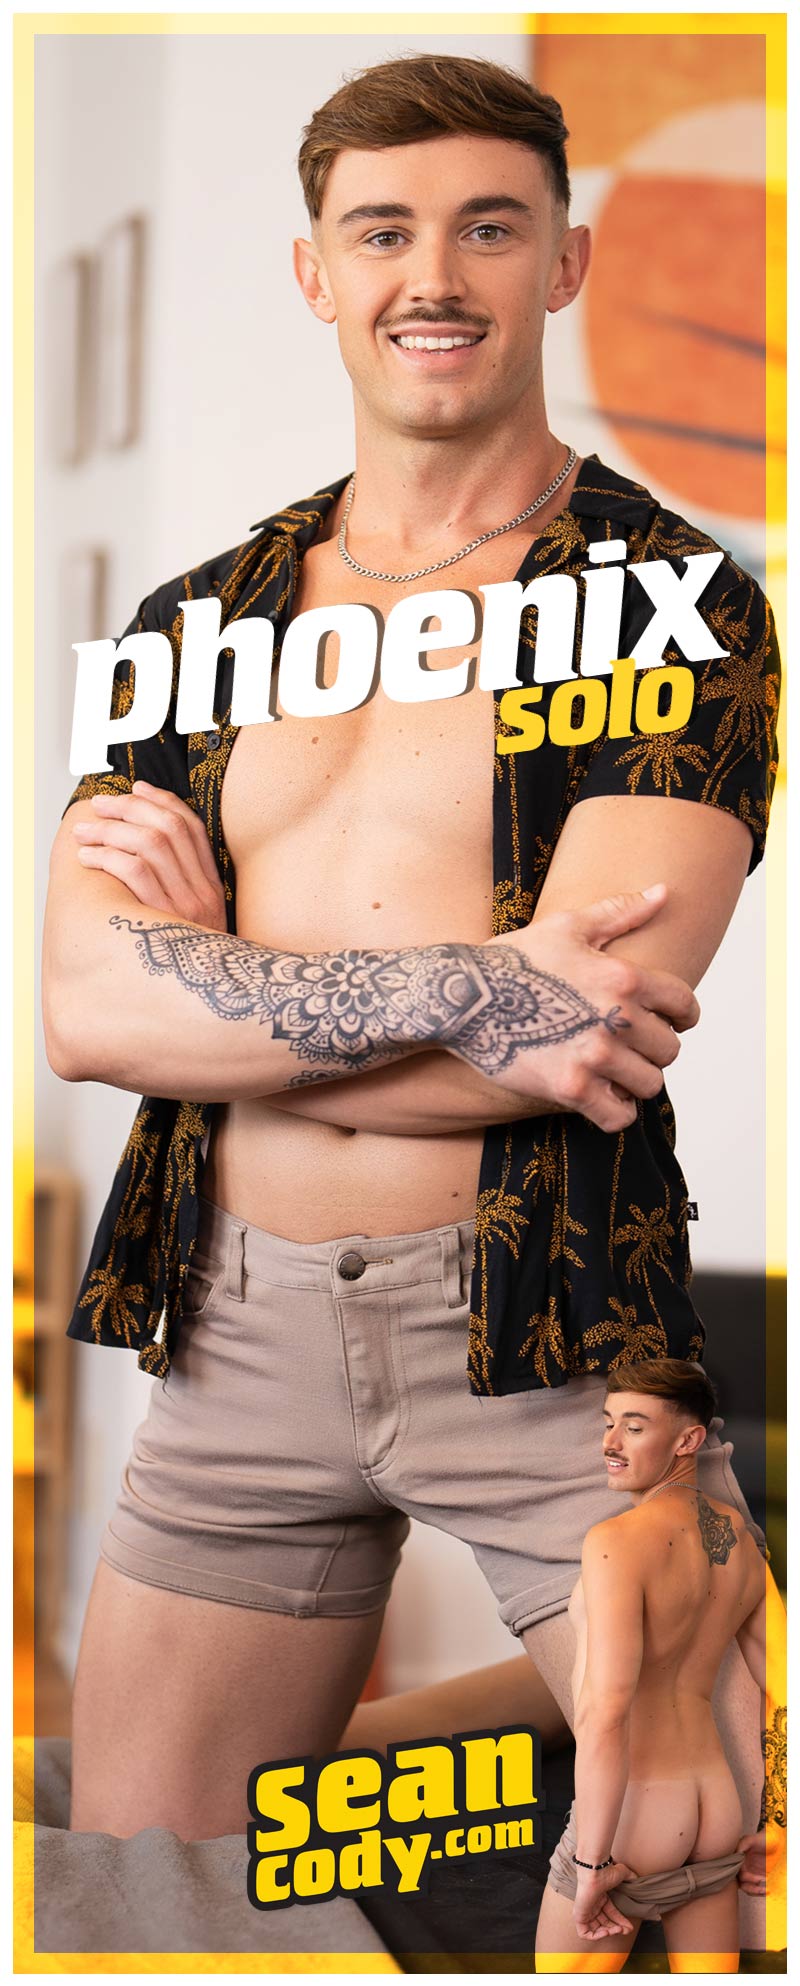 Phoenix at SeanCody